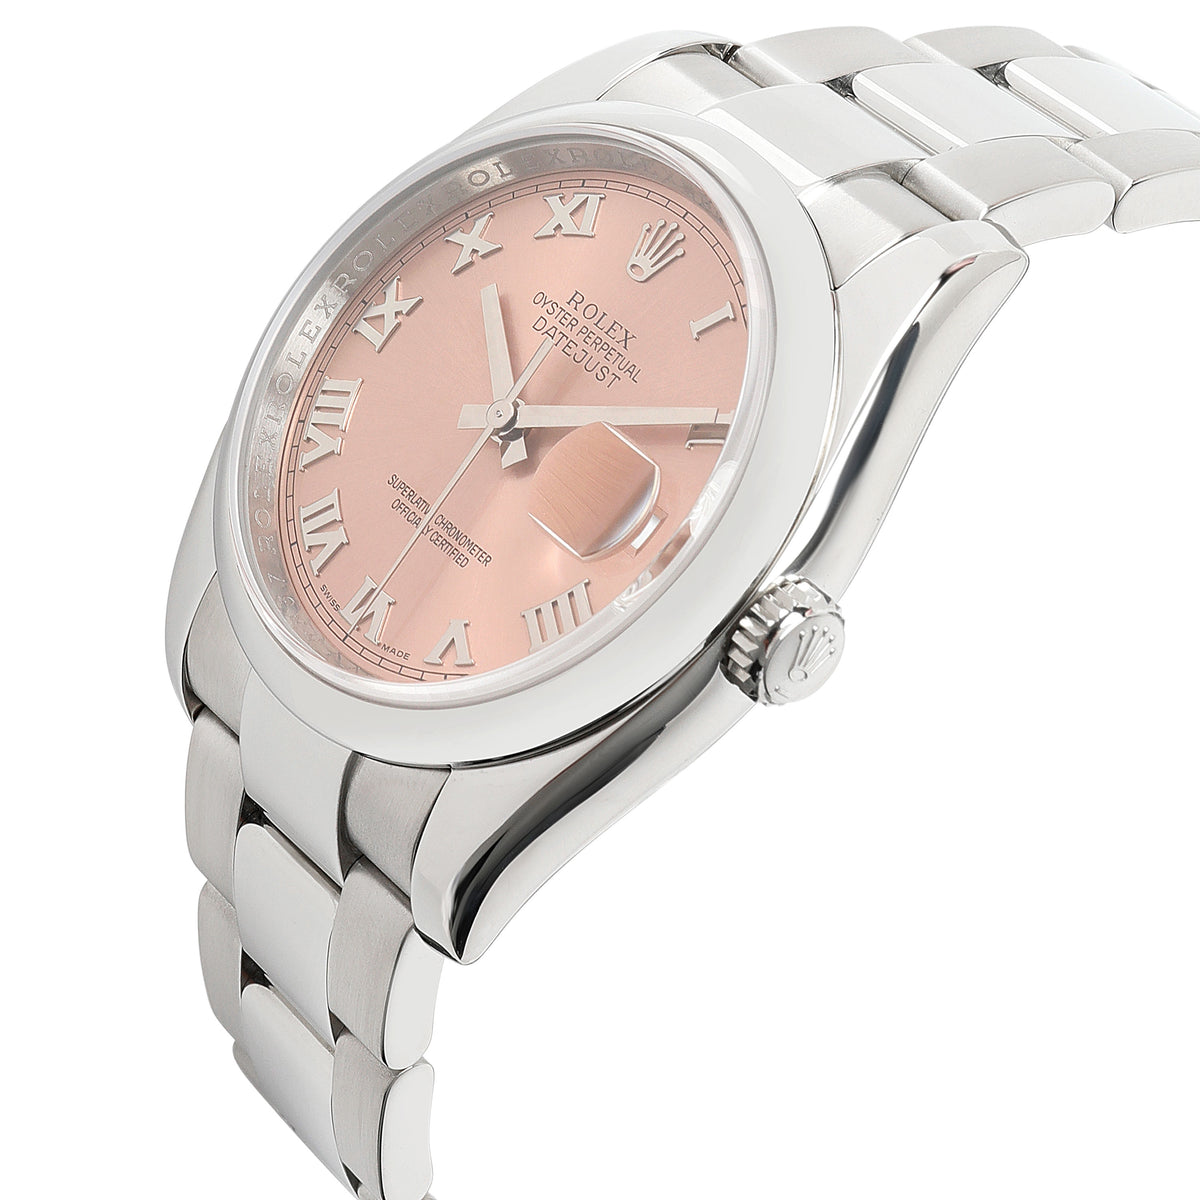 Rolex Datejust 116200 Men's Watch in  Stainless Steel